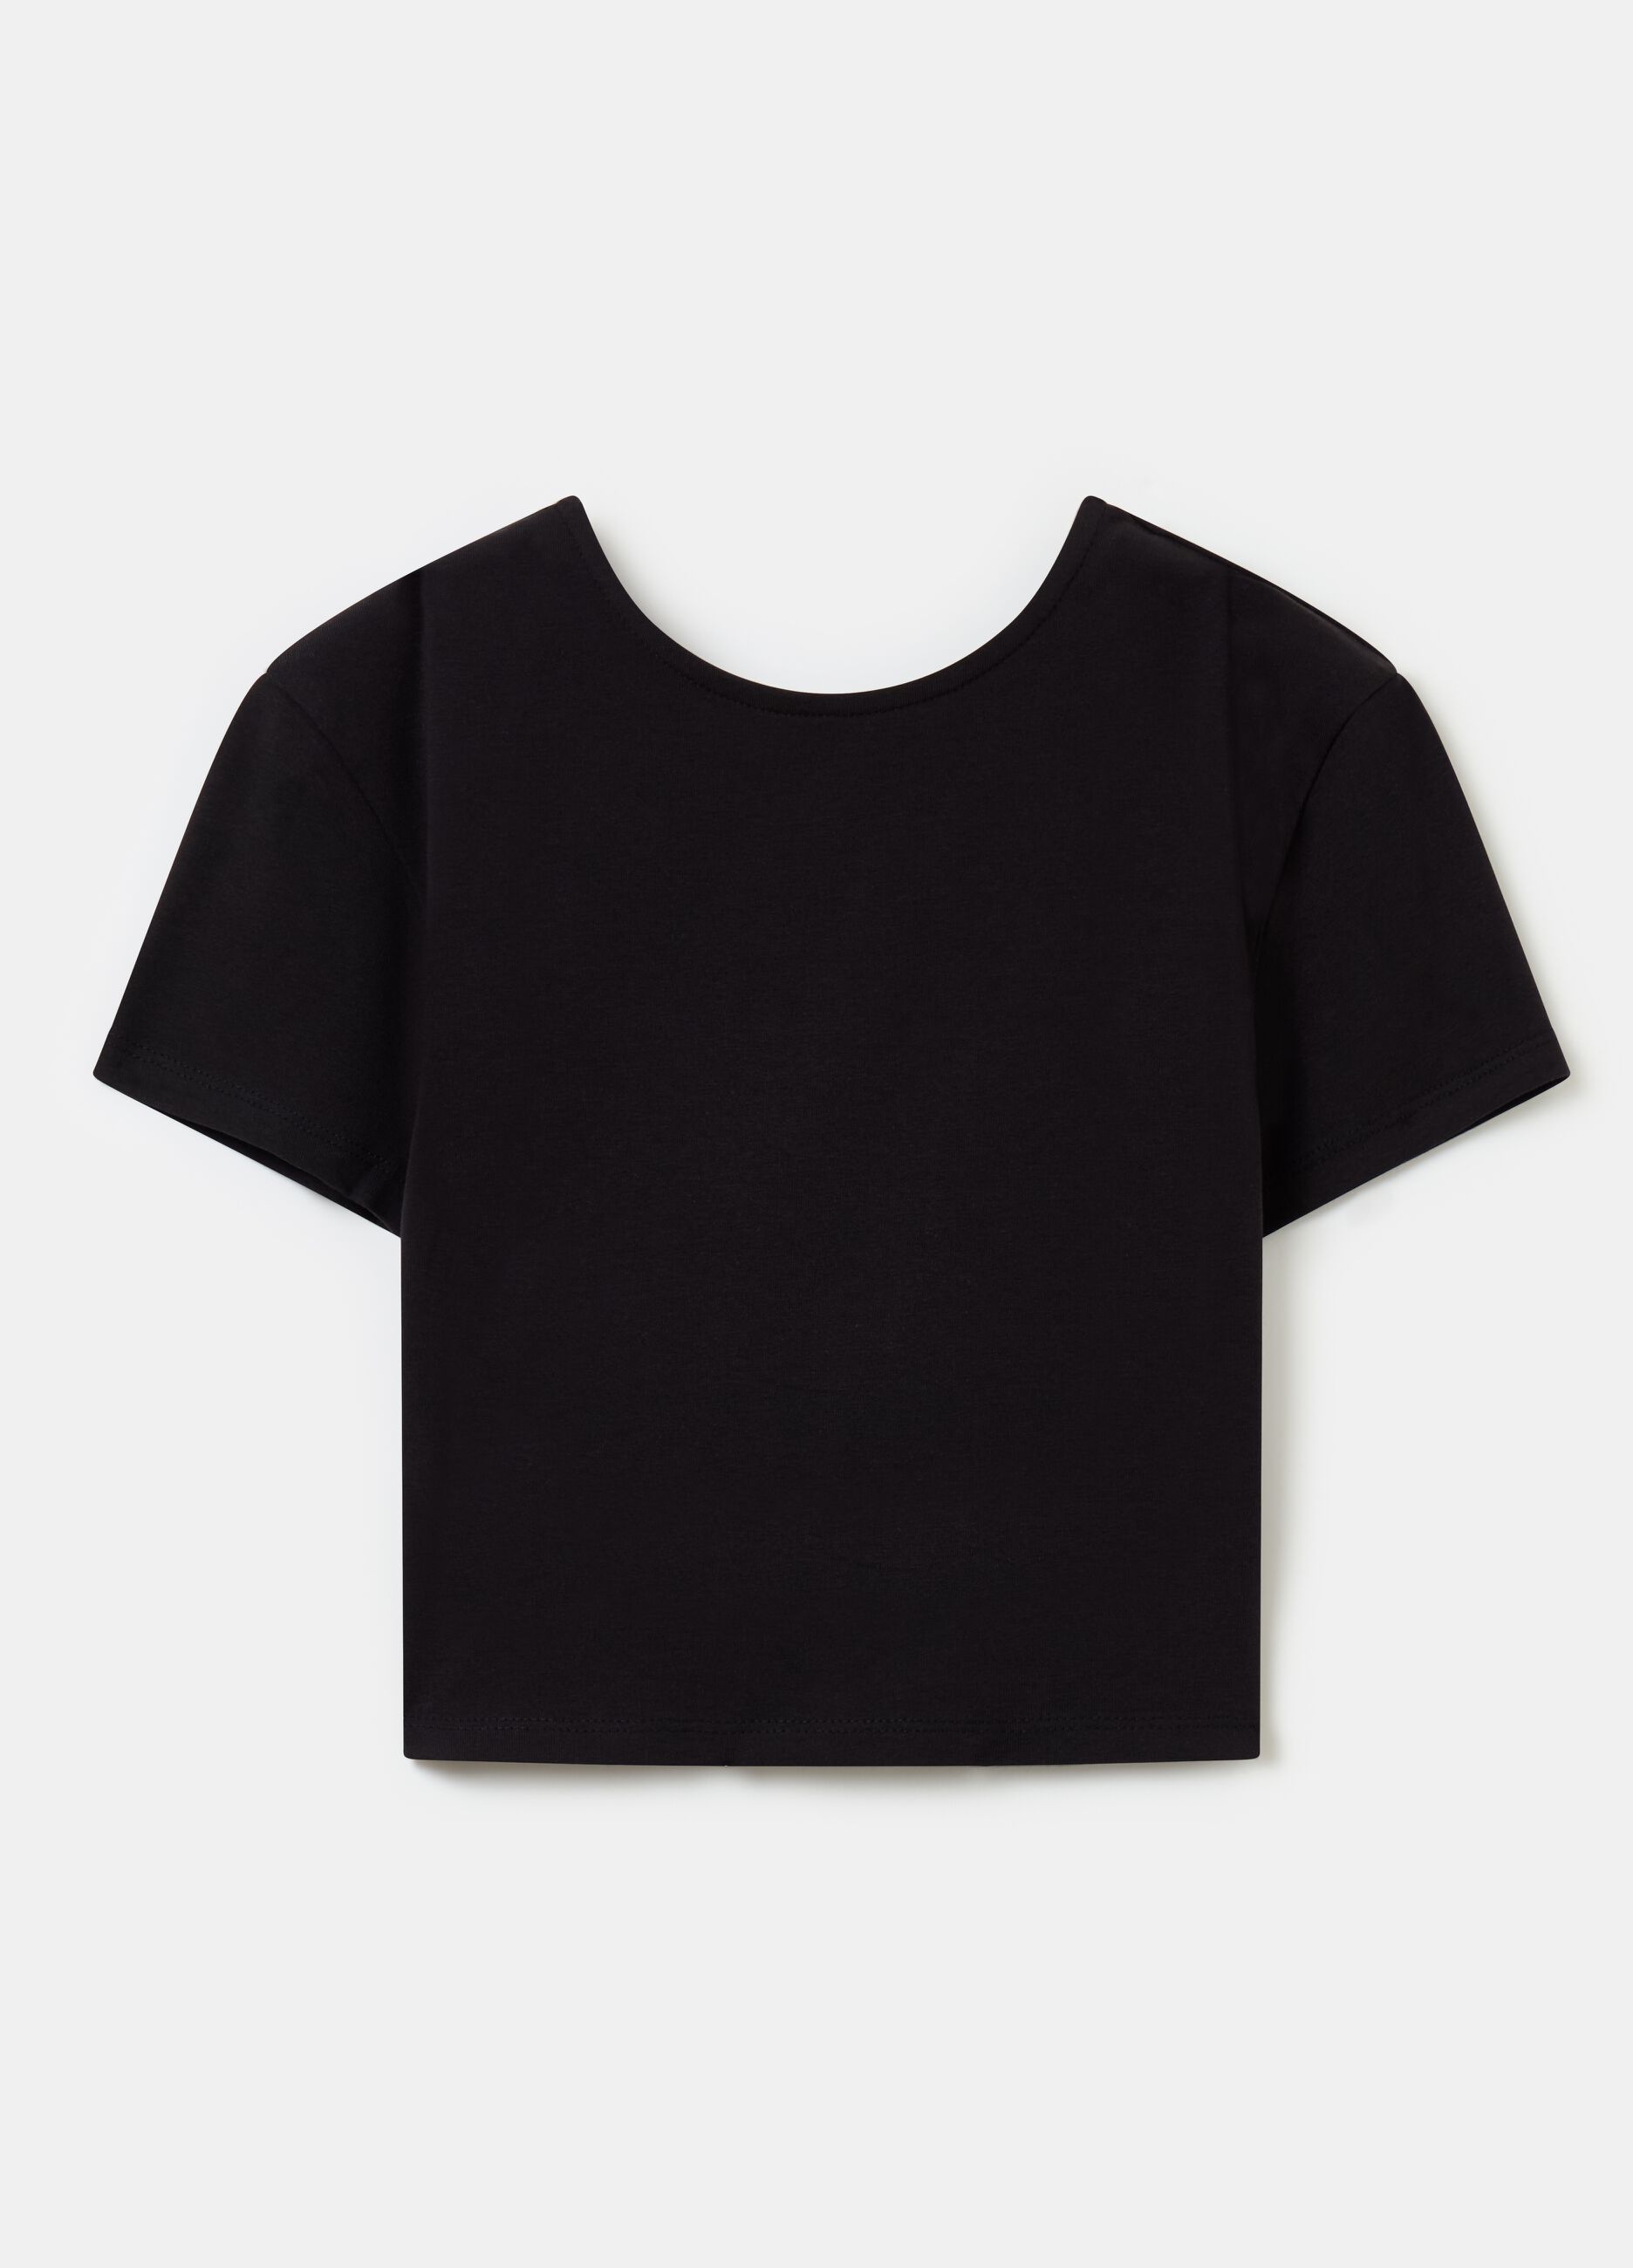 Backless T-shirt Crop Black